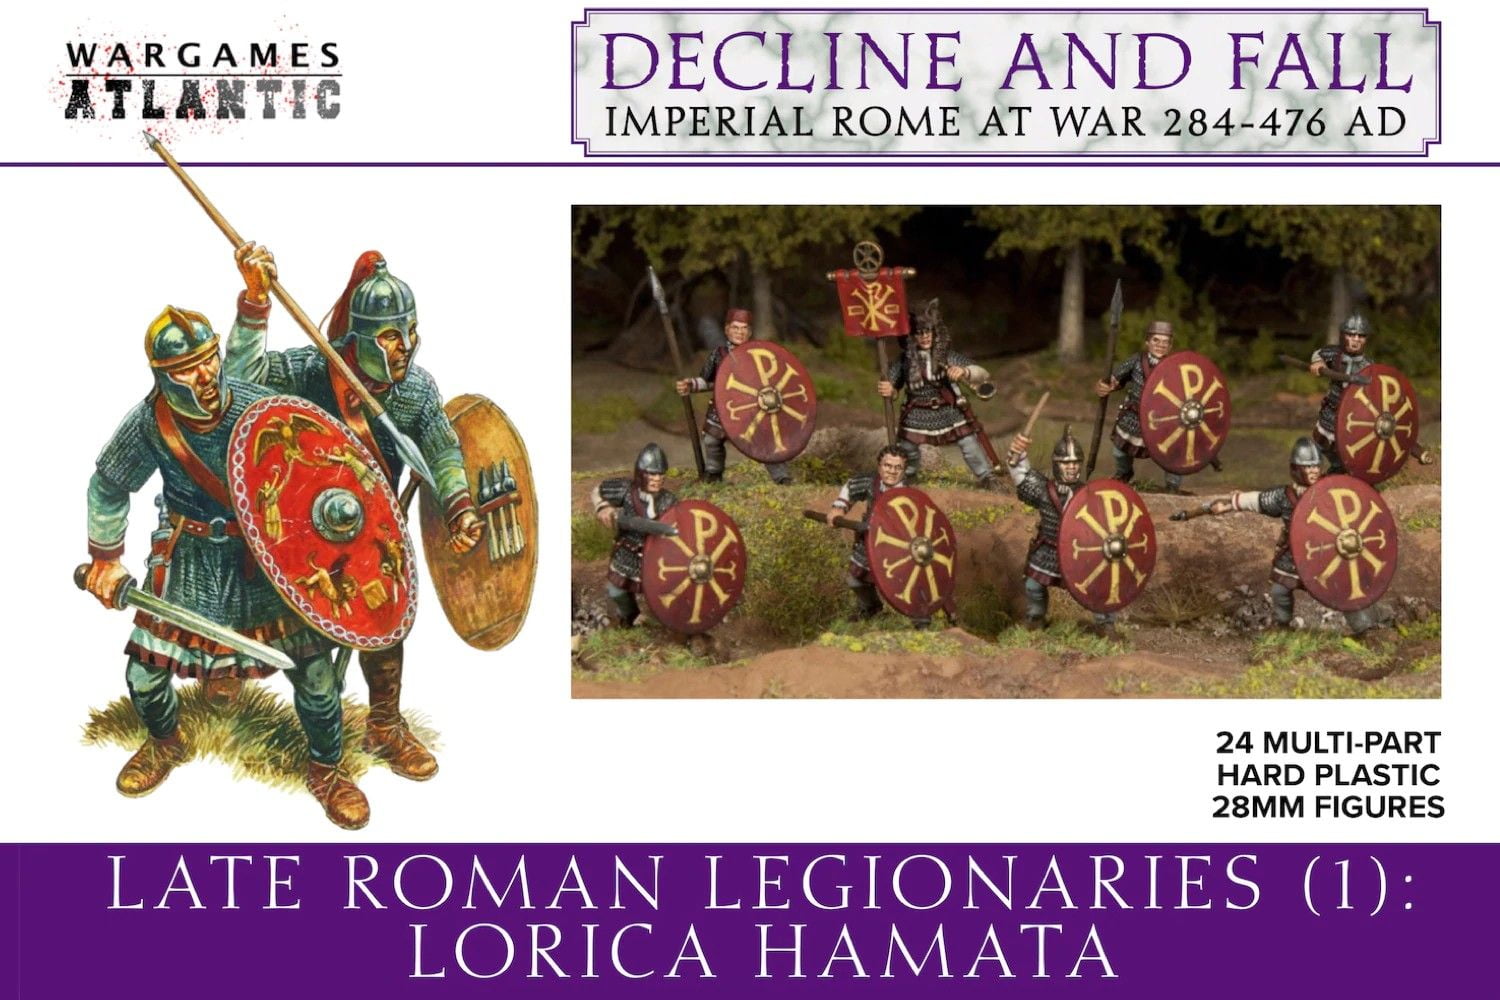 Late Roman Legionaires (1): Lorica Hamata